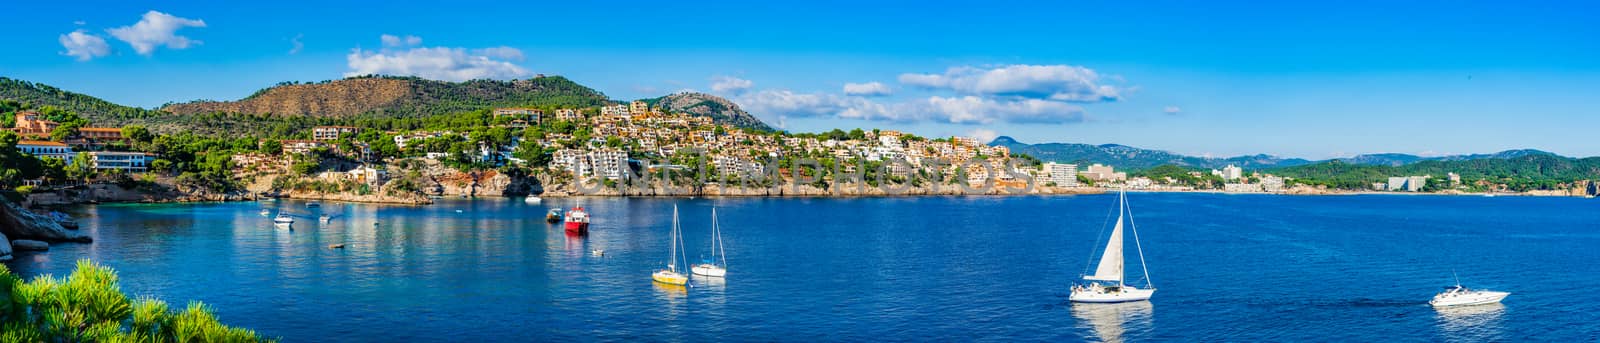 Panorama view of Cala Fornells, beautiful coast on Majorca, Spain Mediterranean Sea by Vulcano